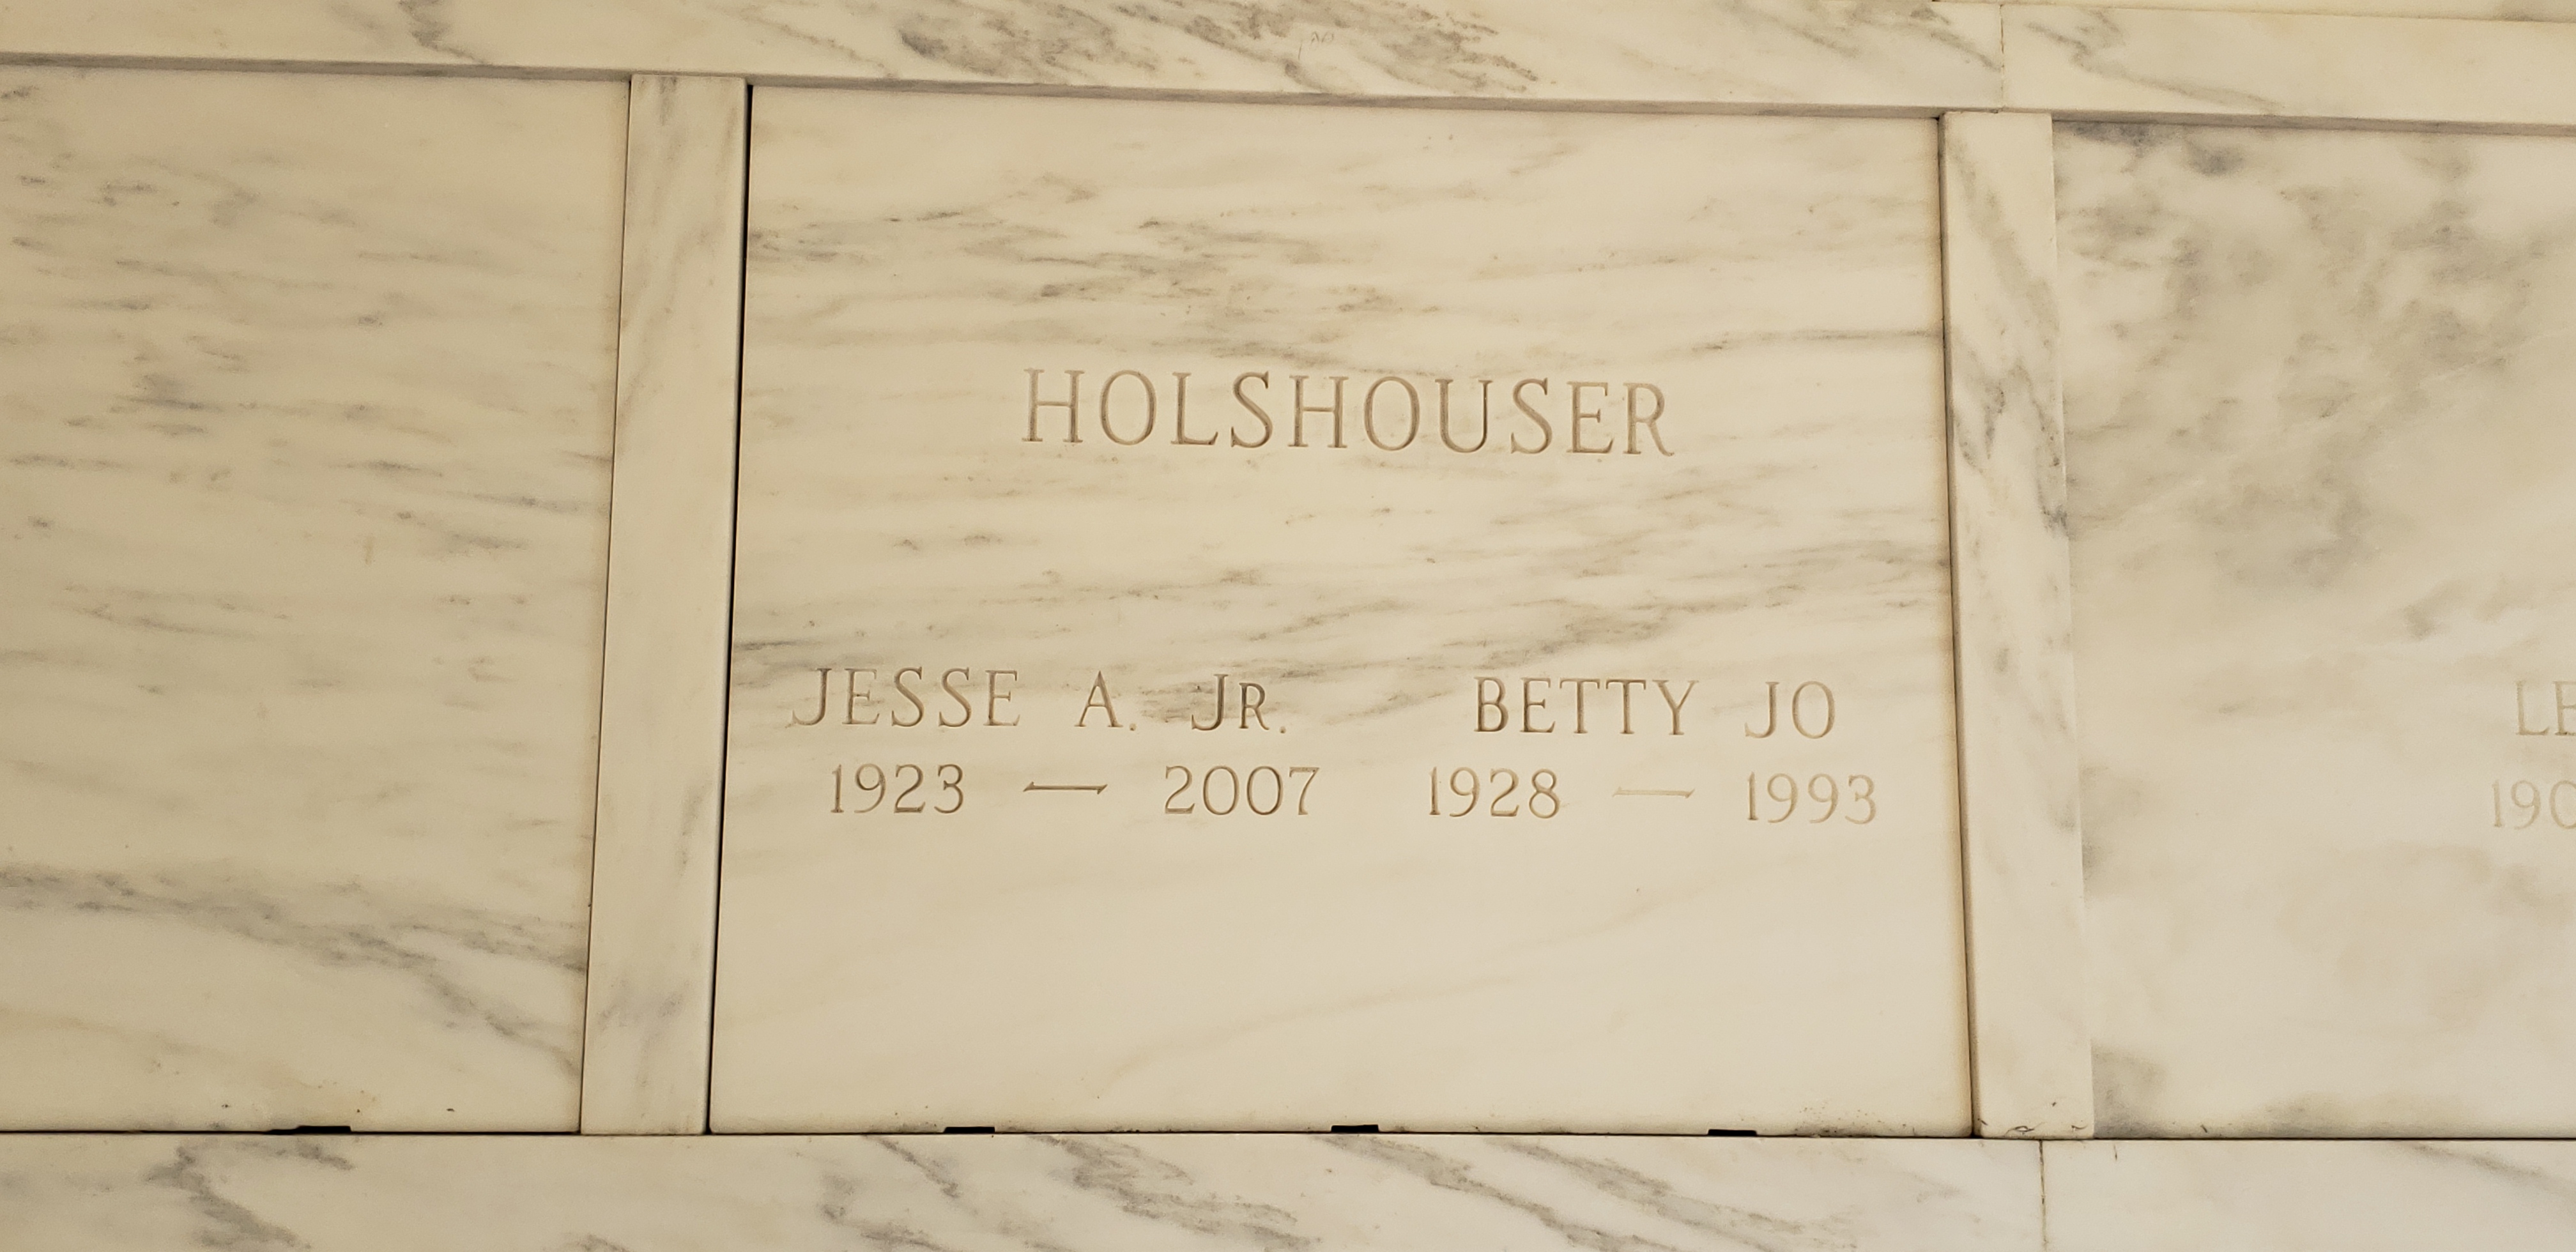 Betty Jo Holshouser